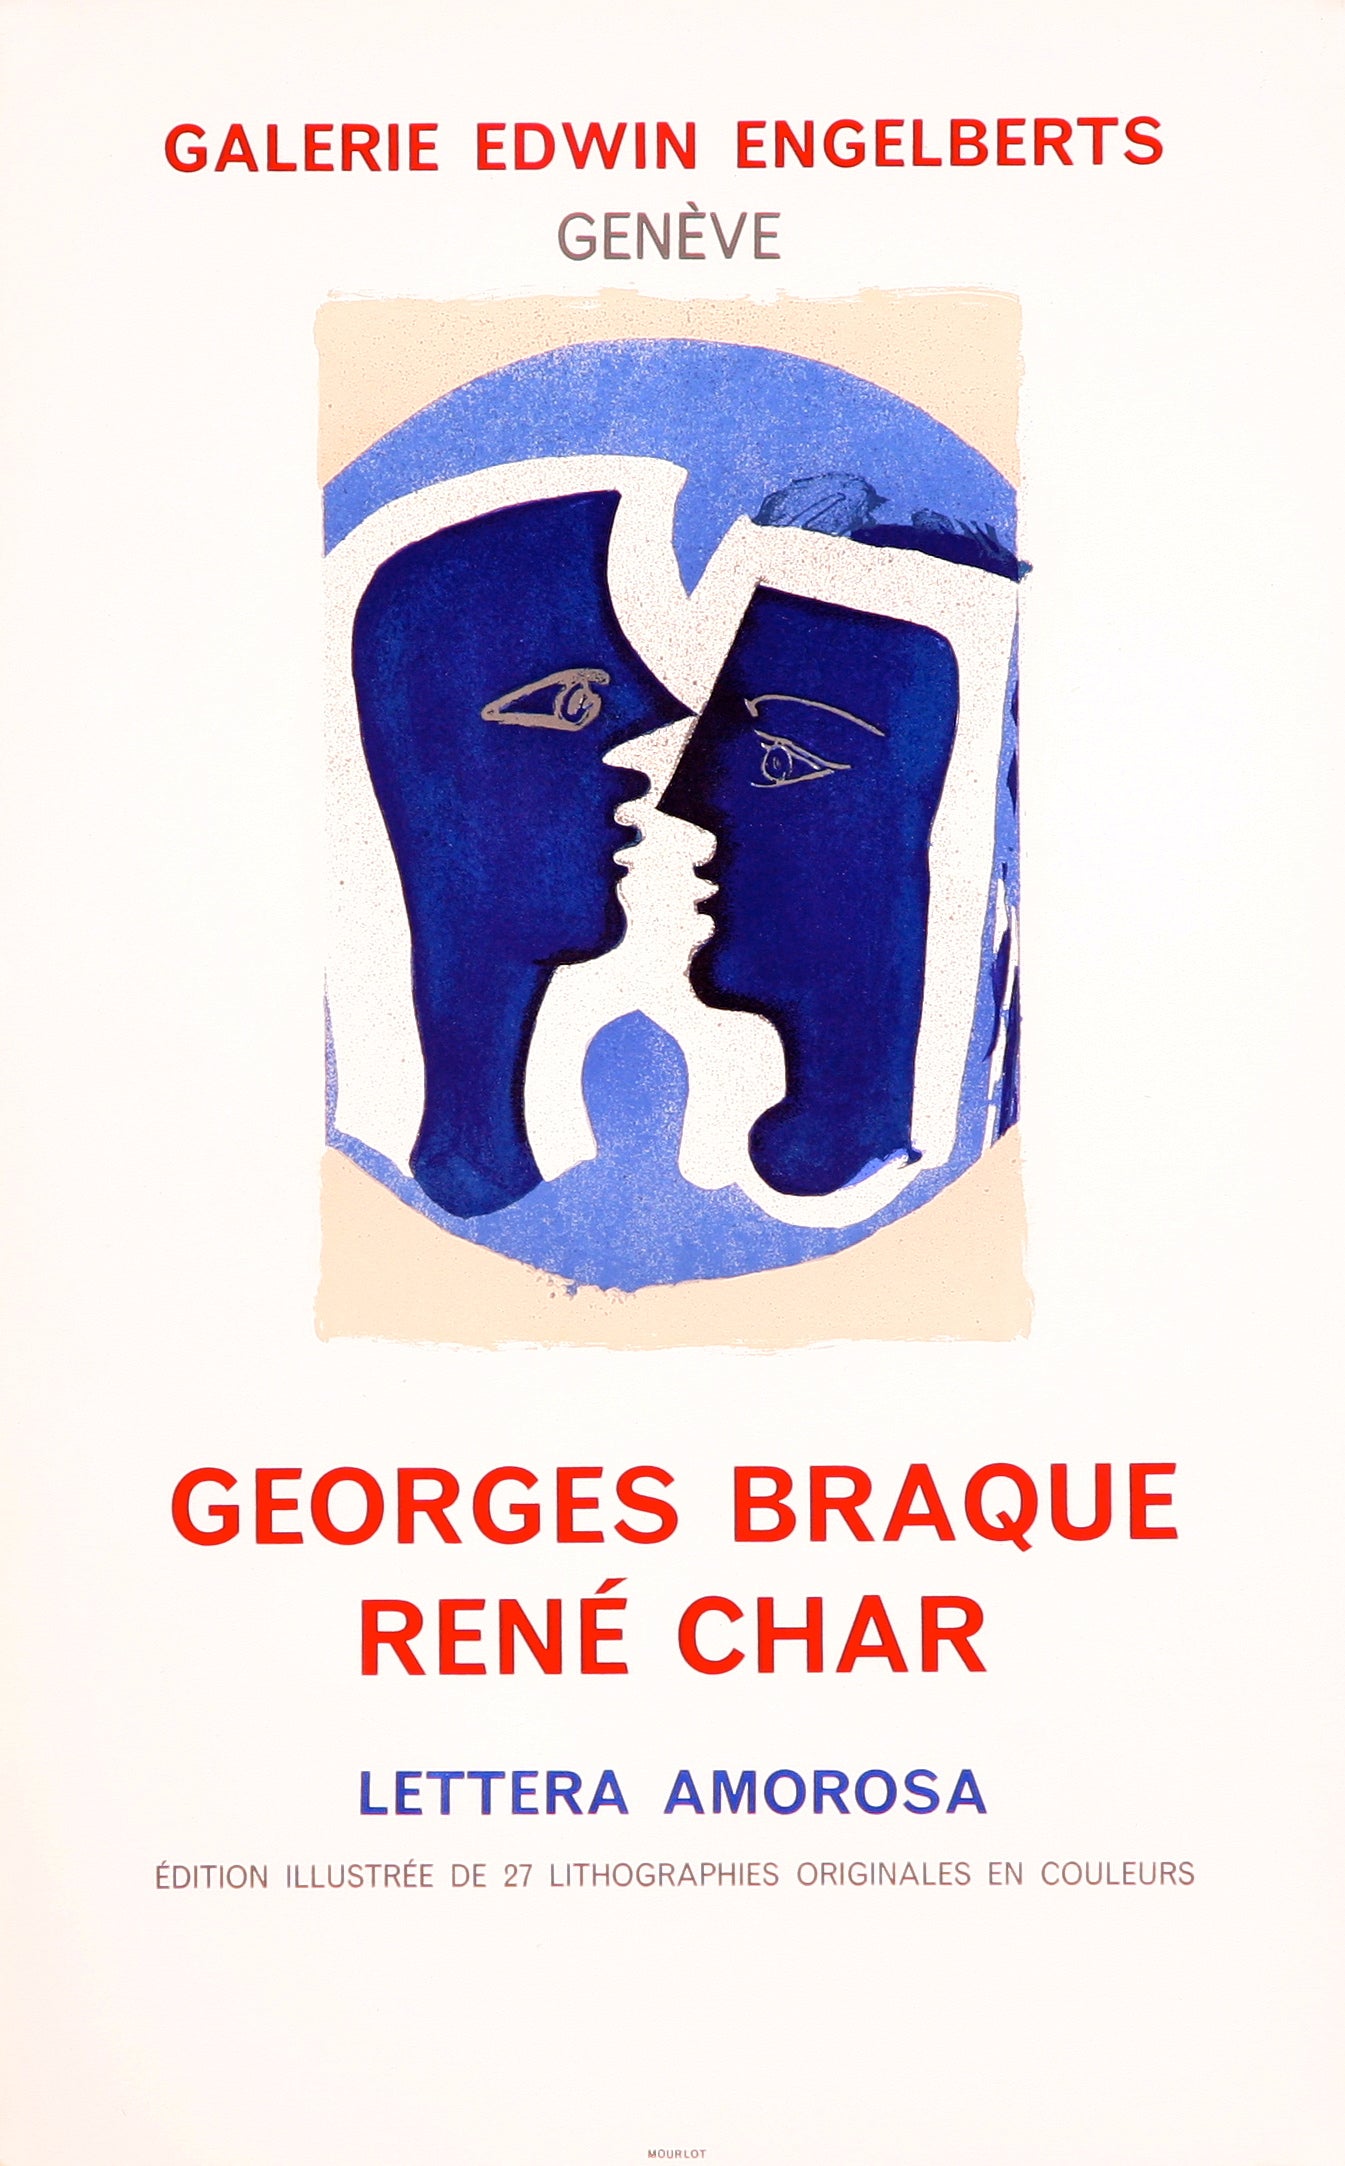 Lettera Amorosa - René Char by Georges Braque, 1963 - Mourlot Editions - Fine_Art - Poster - Lithograph - Wall Art - Vintage - Prints - Original